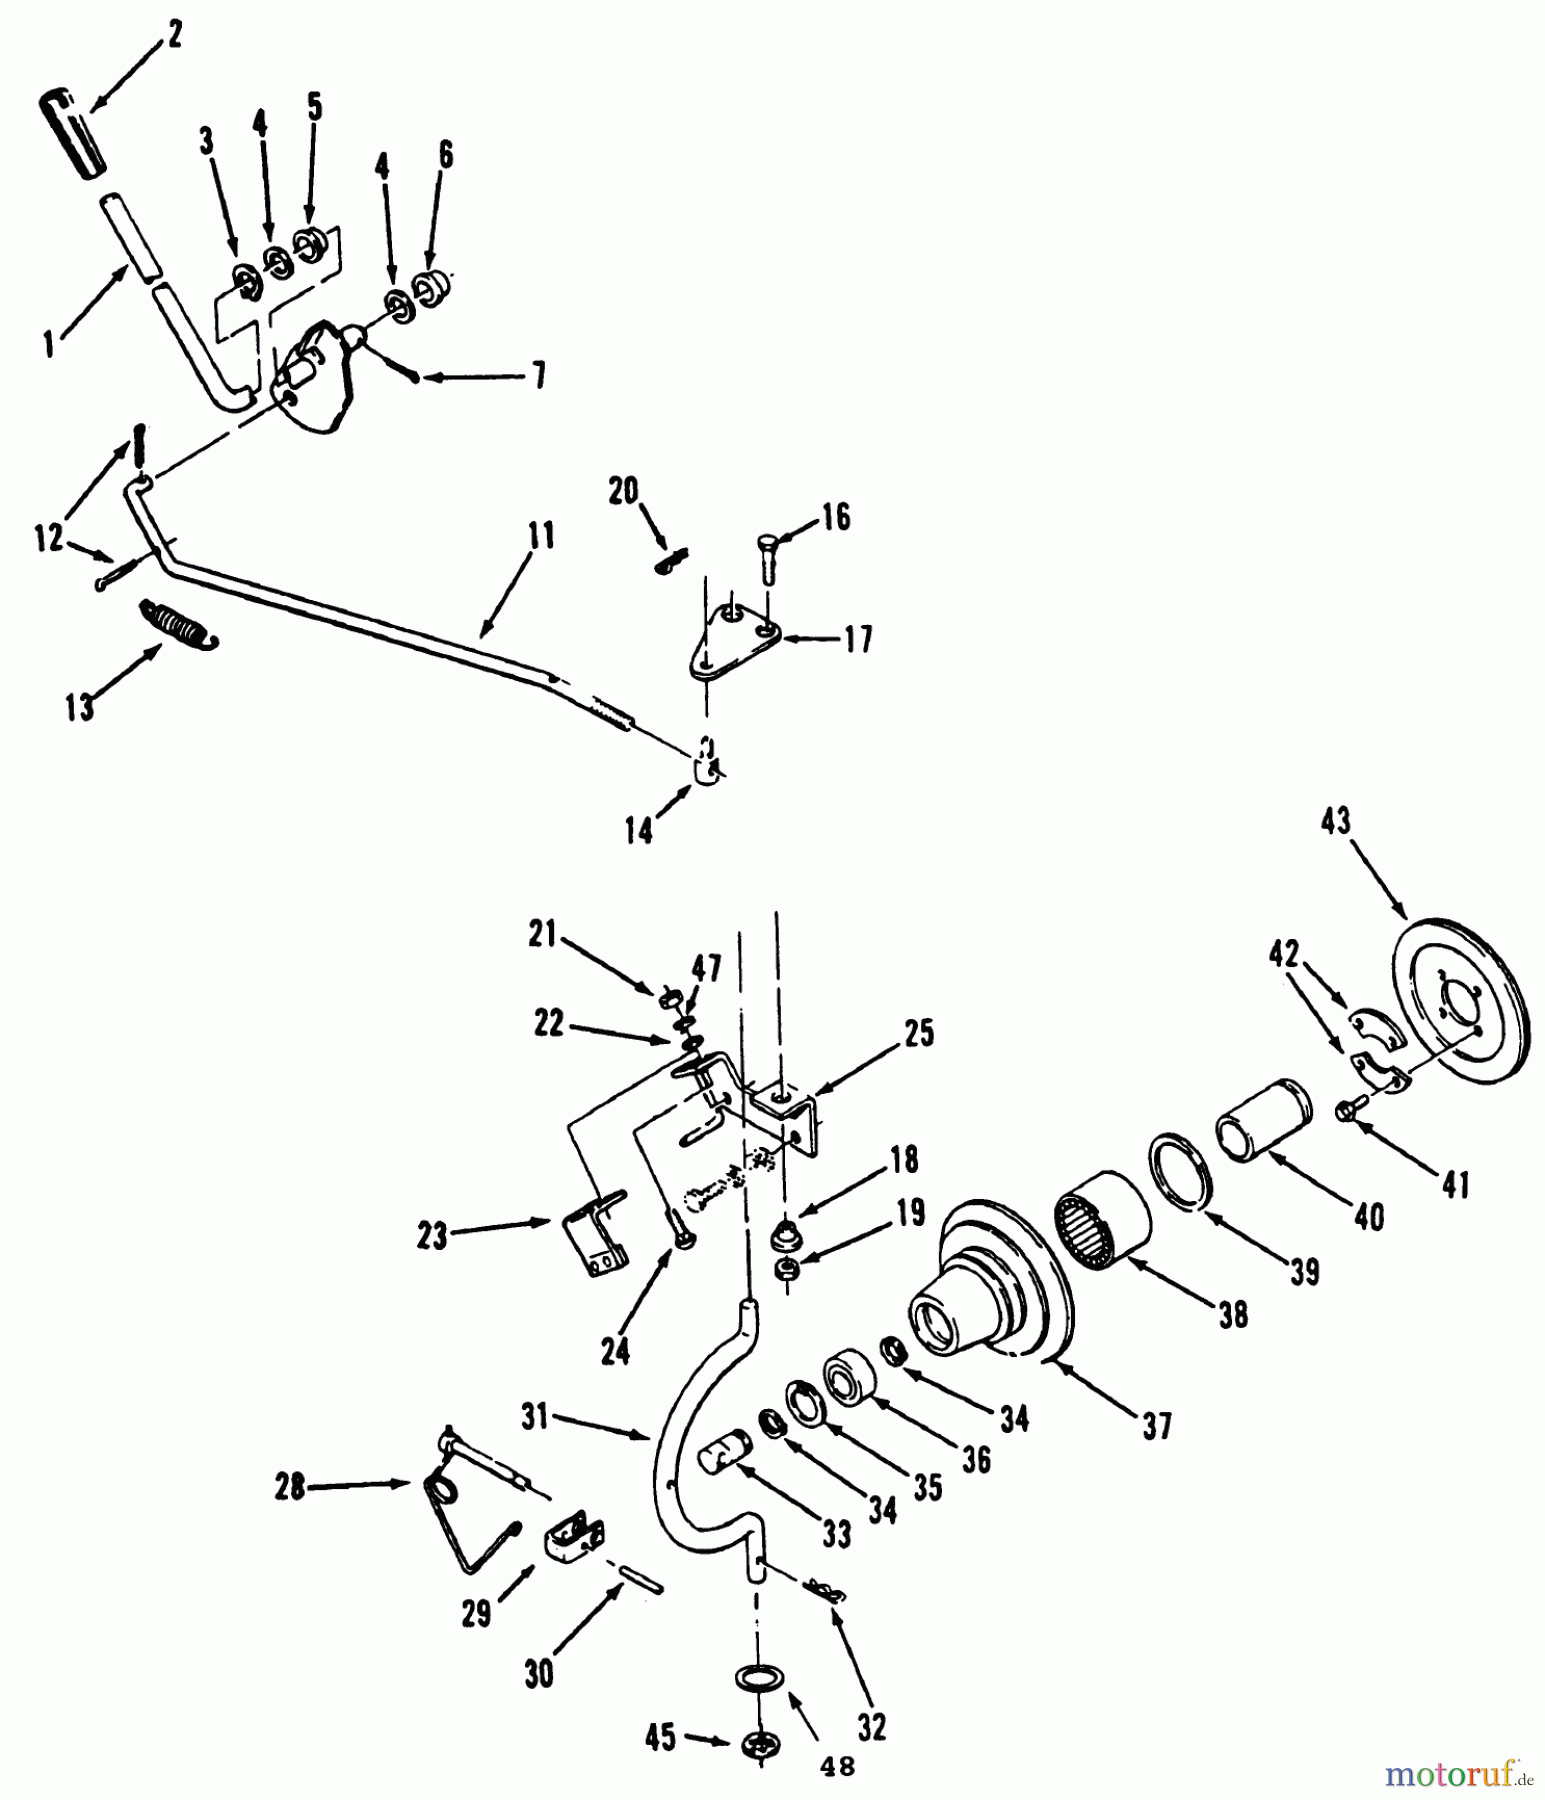  Toro Neu Mowers, Lawn & Garden Tractor Seite 1 51-16OE02 (416-H) - Toro 416-H Garden Tractor, 1992 (2000001-2999999) PTO CLUTCH AND CONTROL